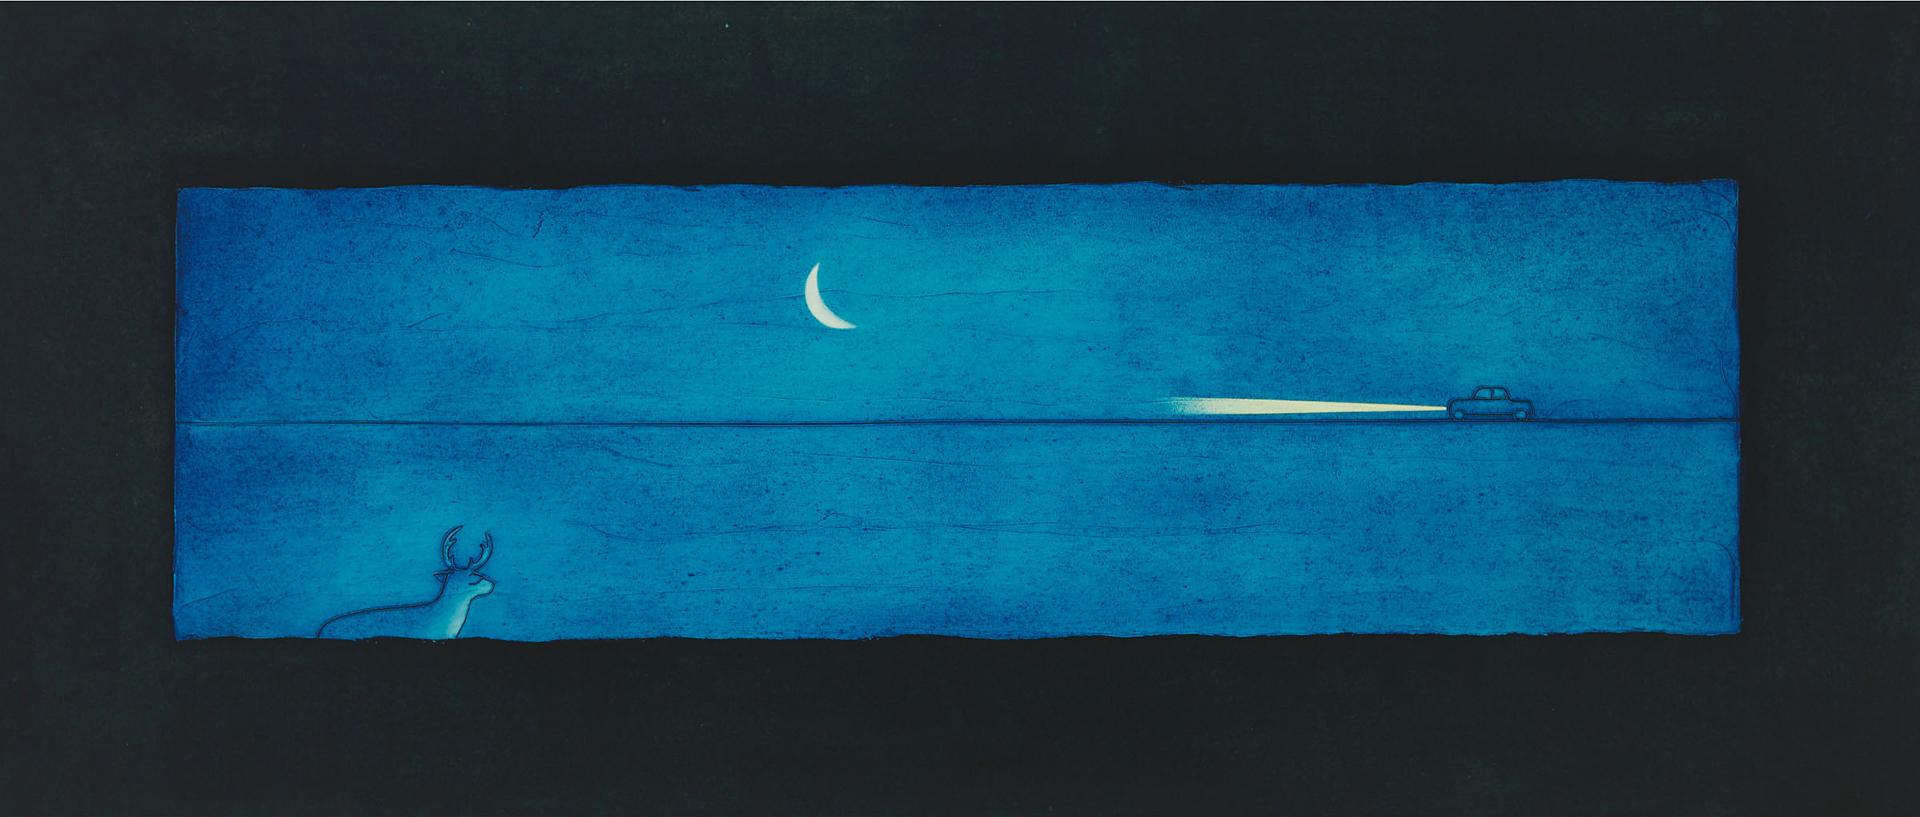 Richard (Rick) Gorenko (1954) - Night Scene With Deer, Crescent Moon, And Speeding Automobile, 1999